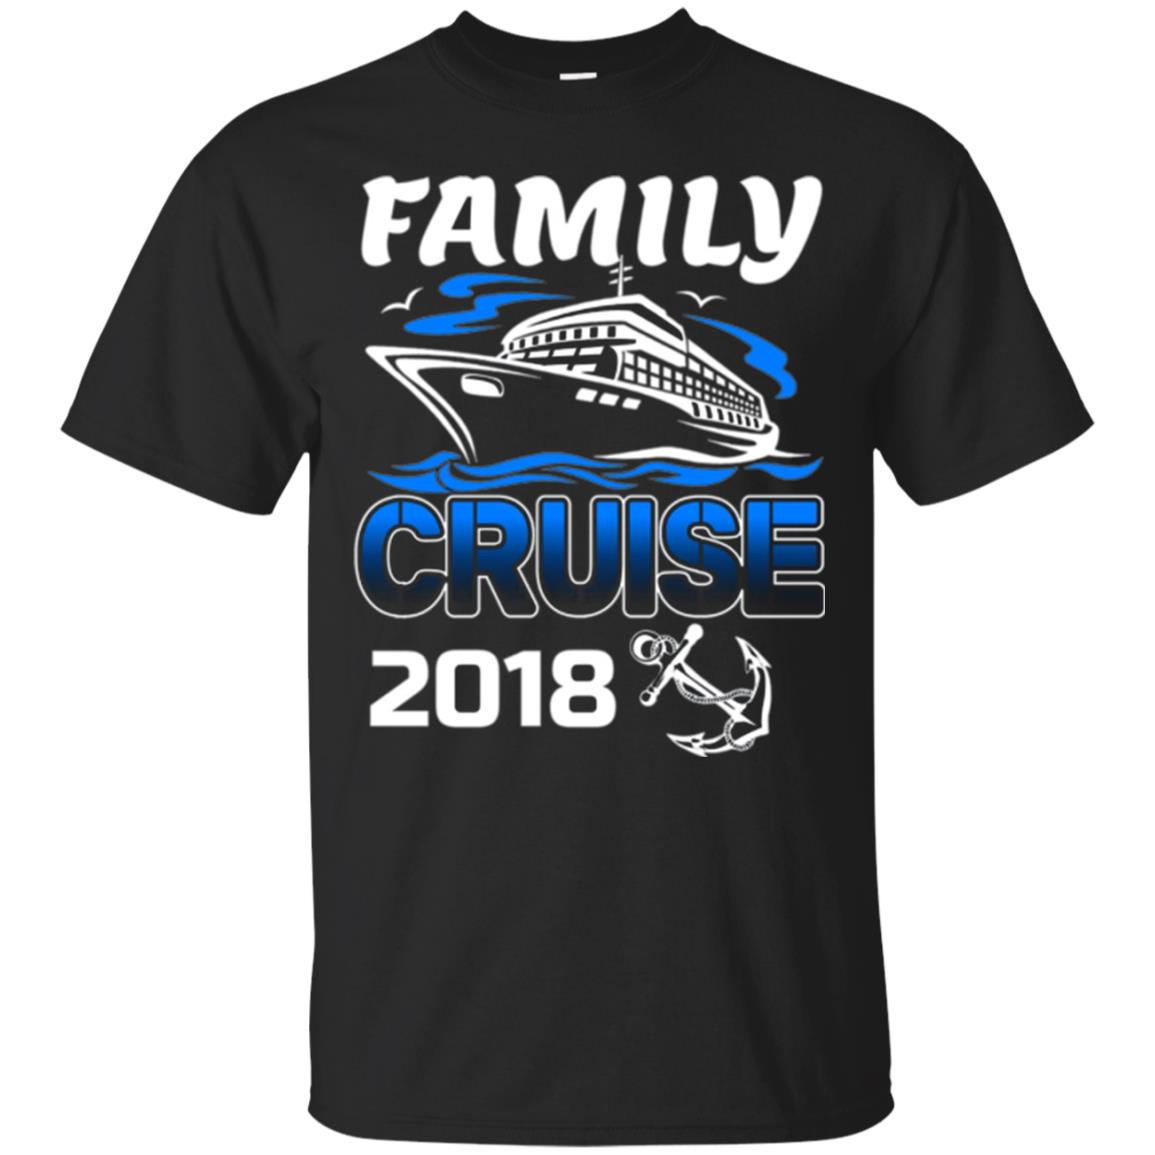 Family Cruise 2018 Shirt Cruise Ship Vacation Holiday Men’s T-Shirt